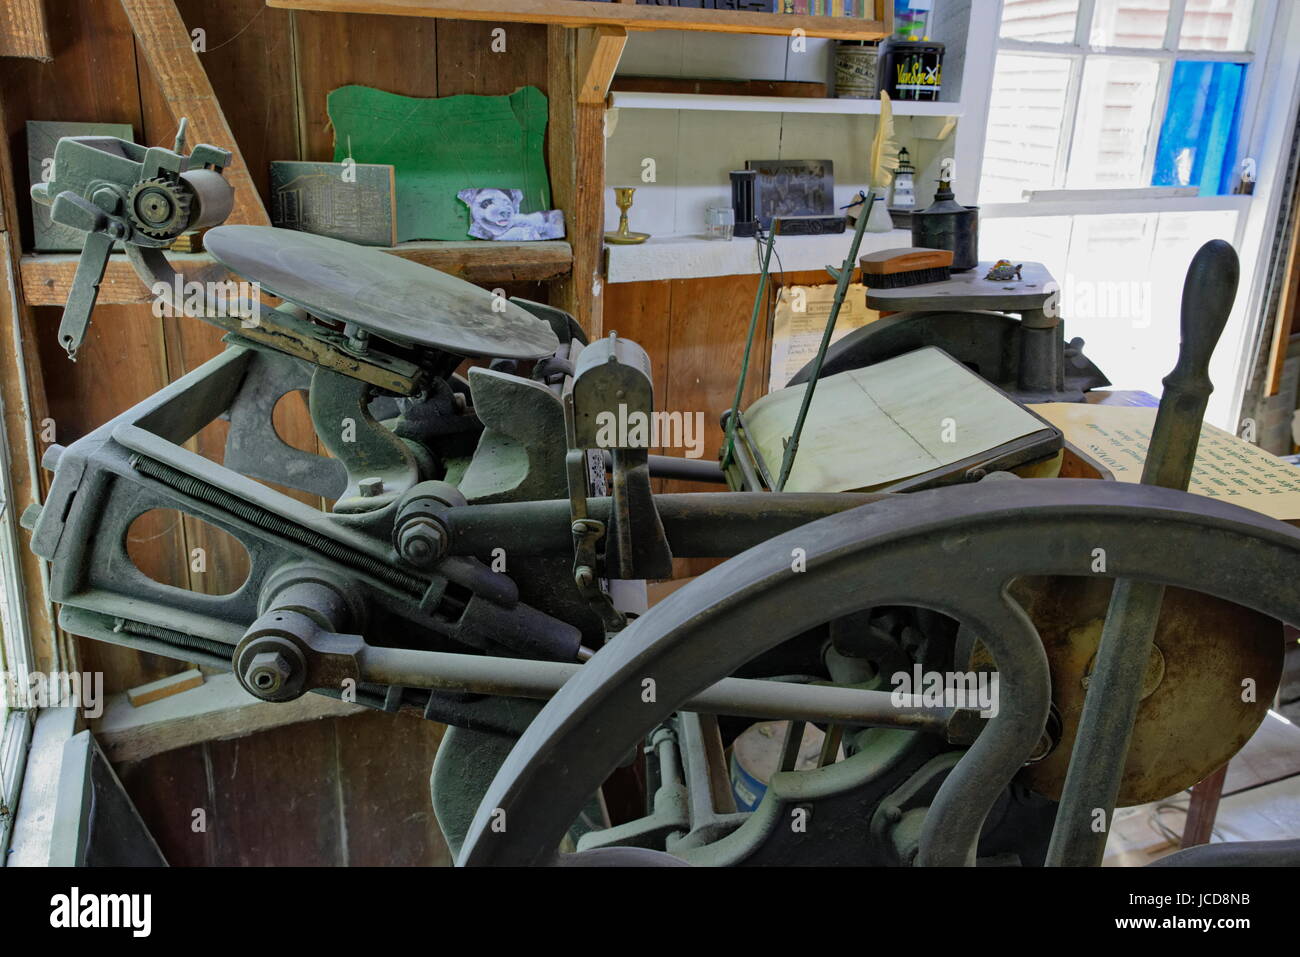 Antique Print Shop Interior with Stock Photo - Alamy